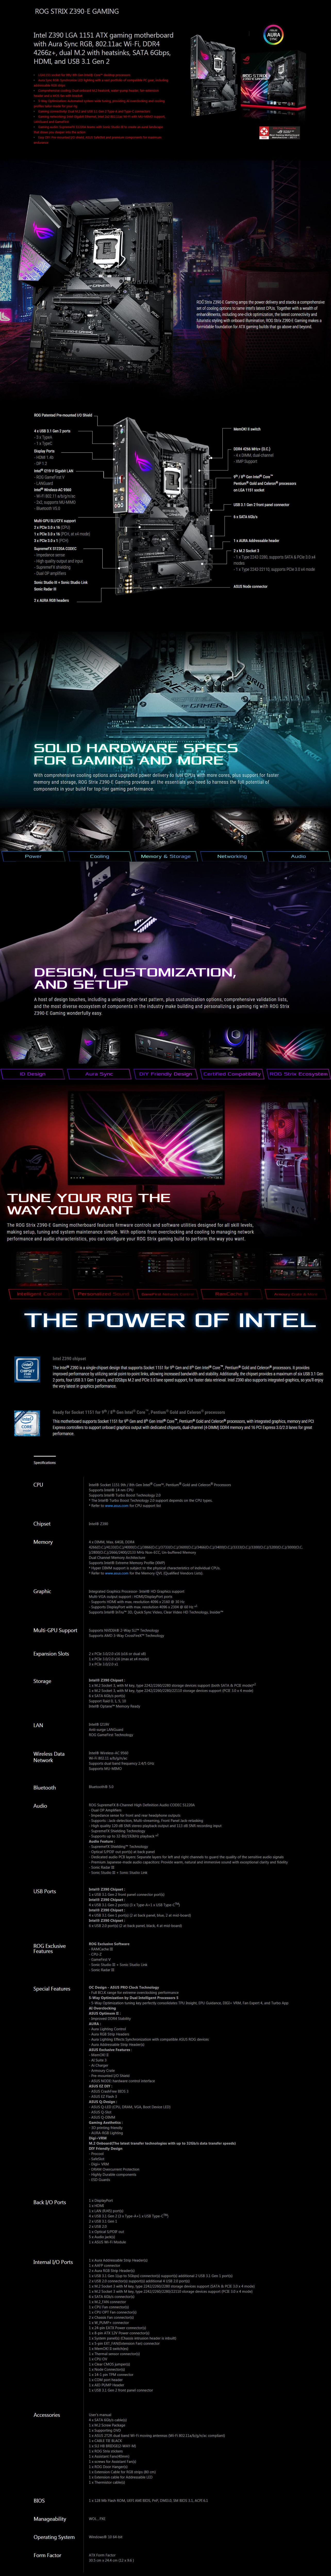  Buy Online Asus ROG STRIX Z390-E GAMING Intel Motherboard